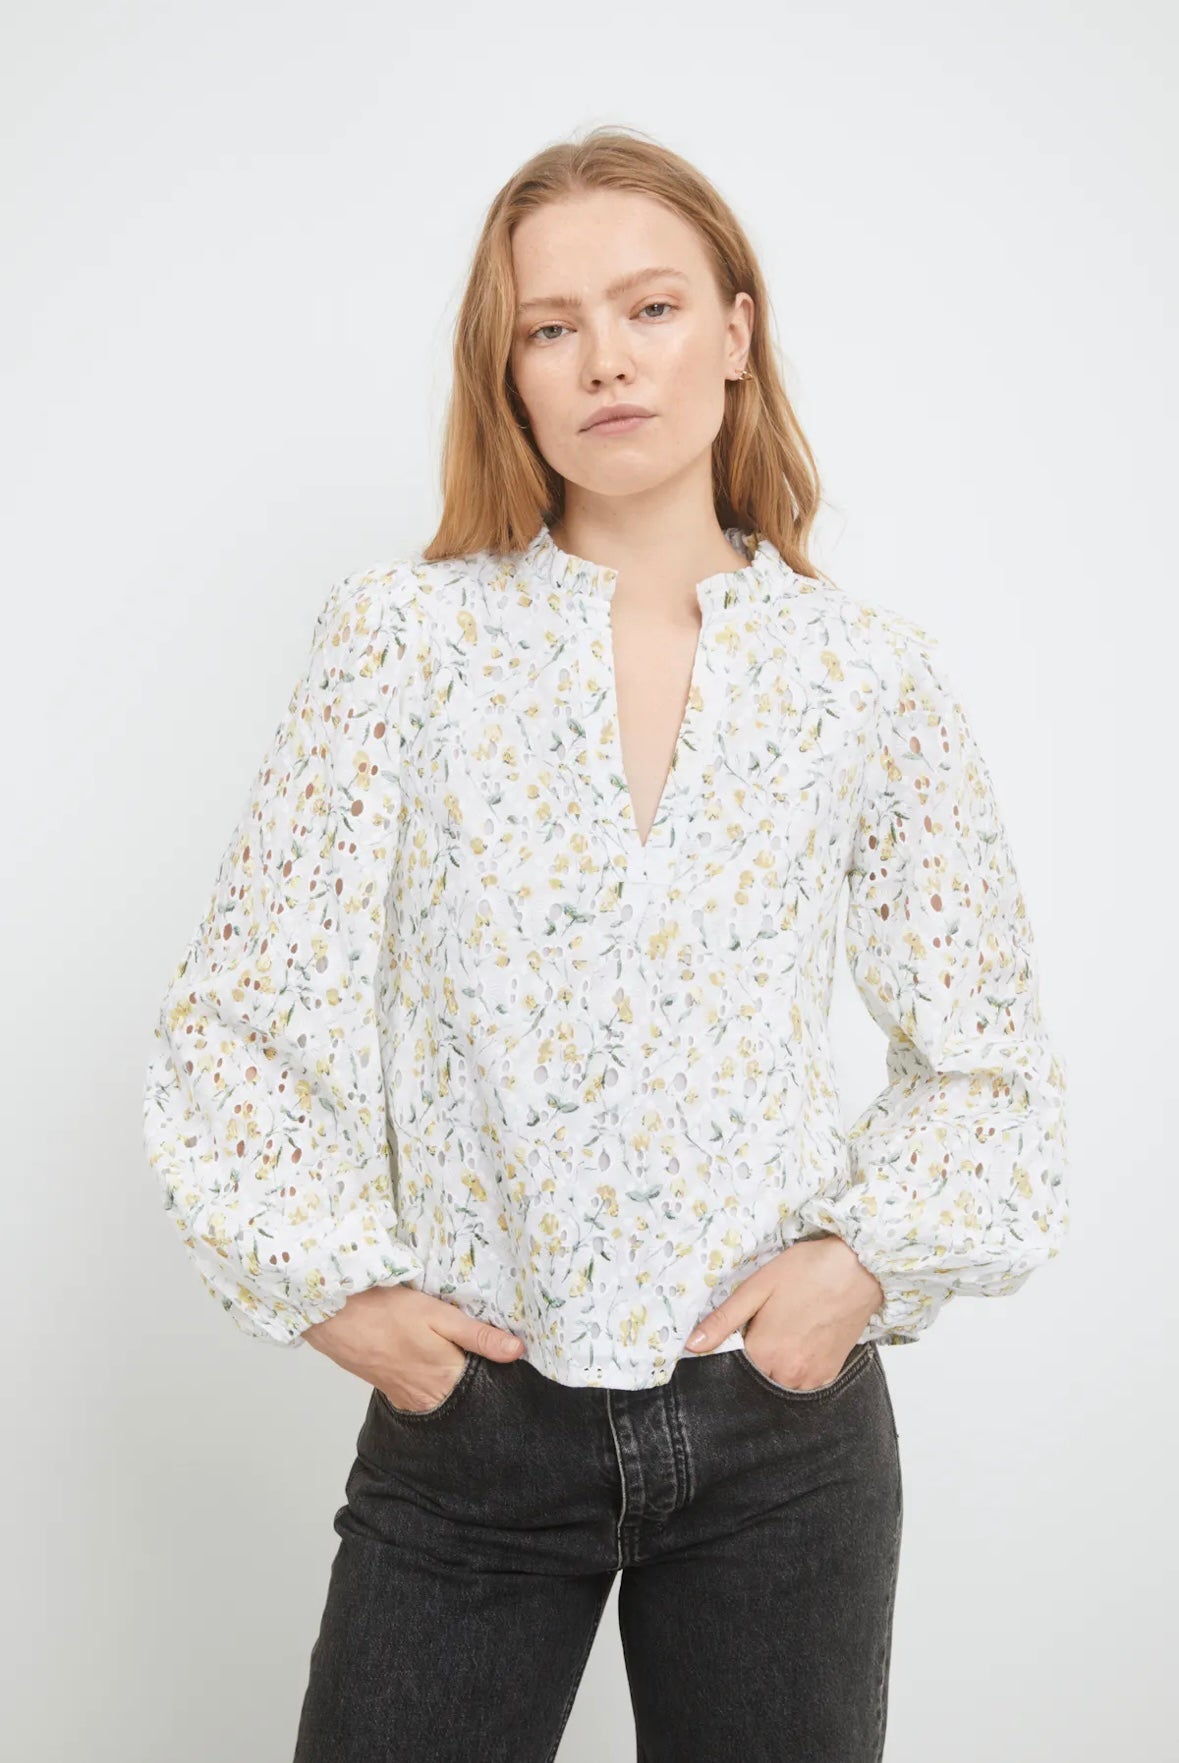 Camilla Pihl Karro blouse - Yellow Branch Print